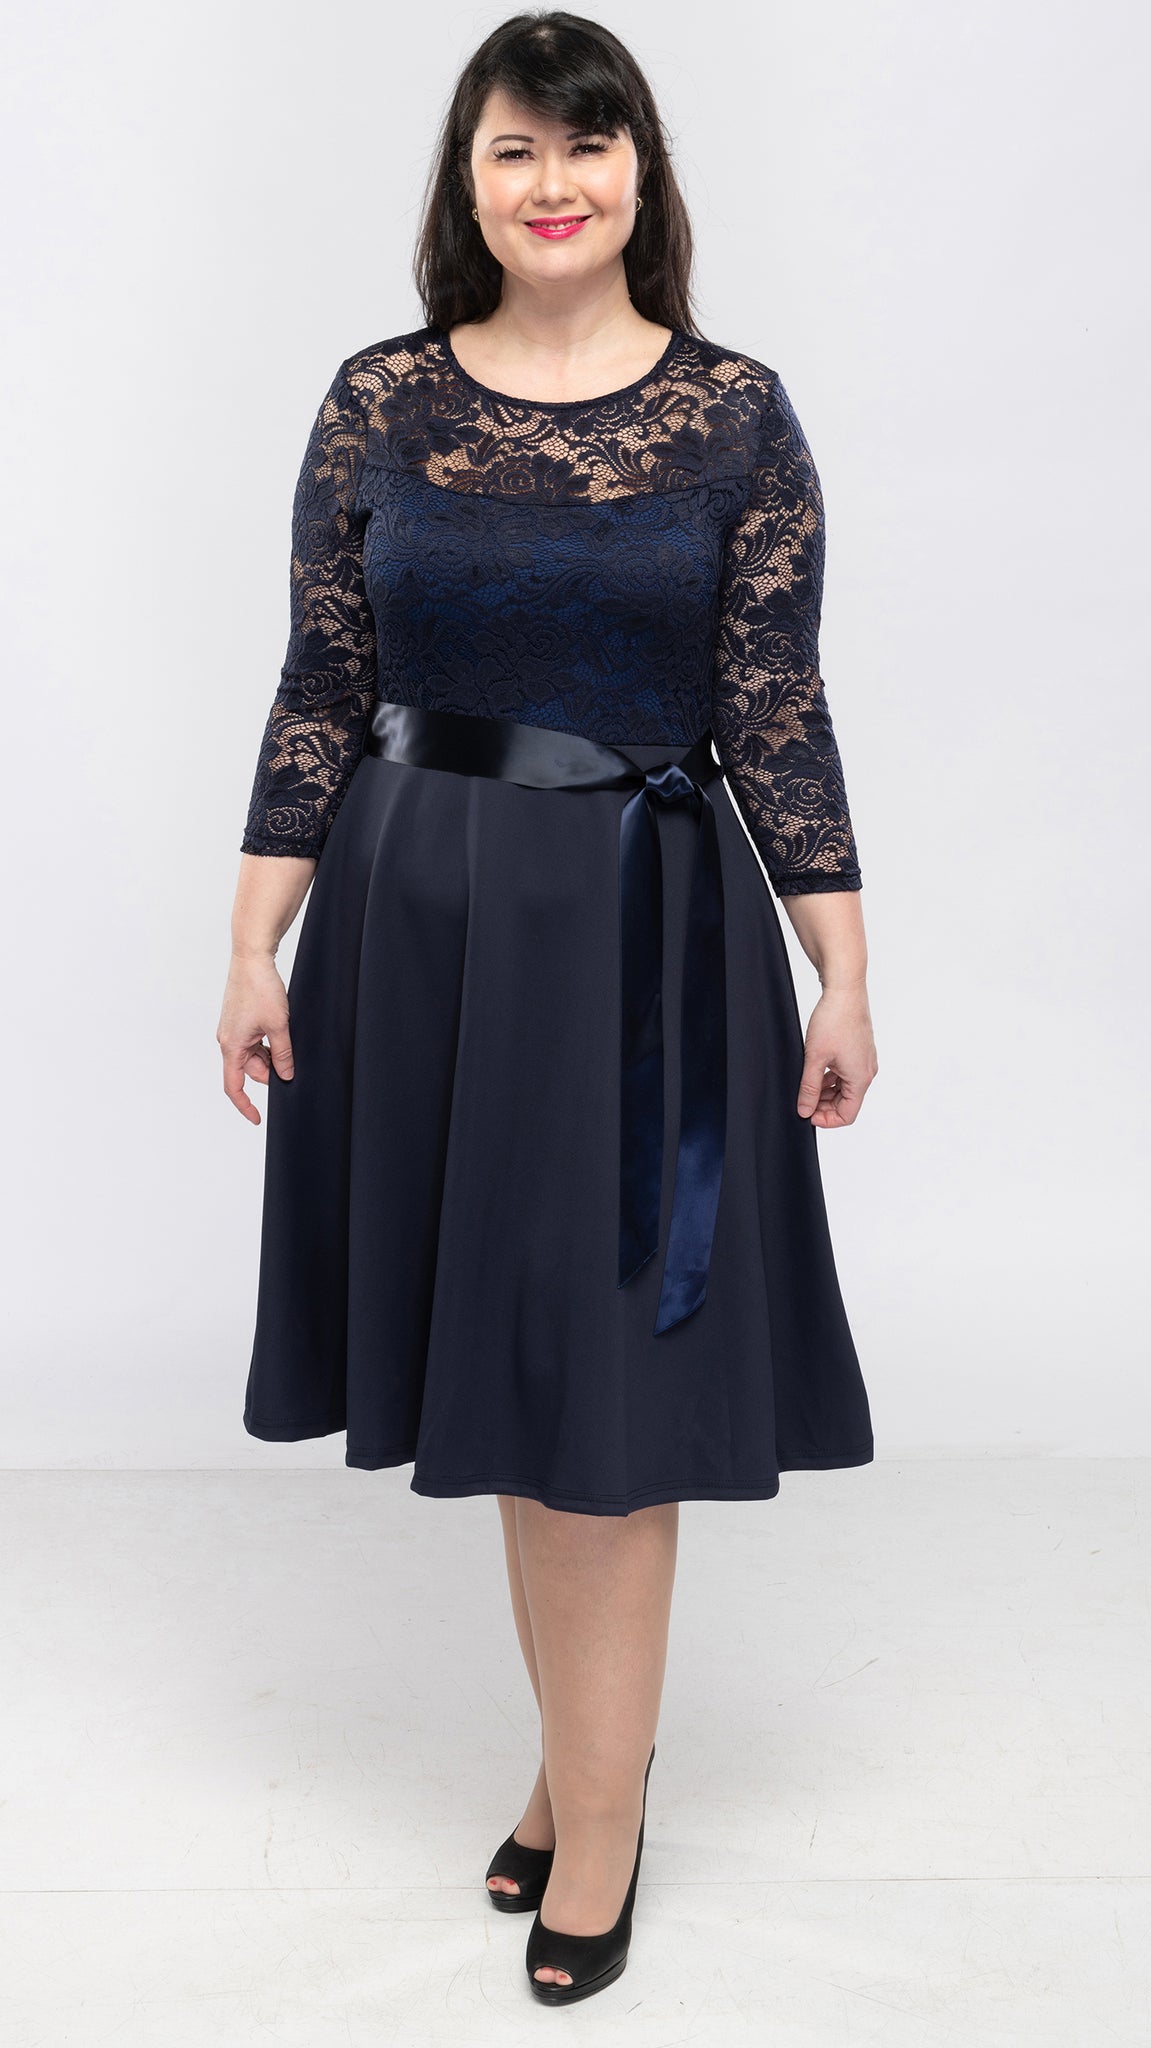 Women's Fancy Dress w/Laced Body & Ribbon Belt-3 Colors/4 Sizes-12pcs/pack ($20.90/pc)